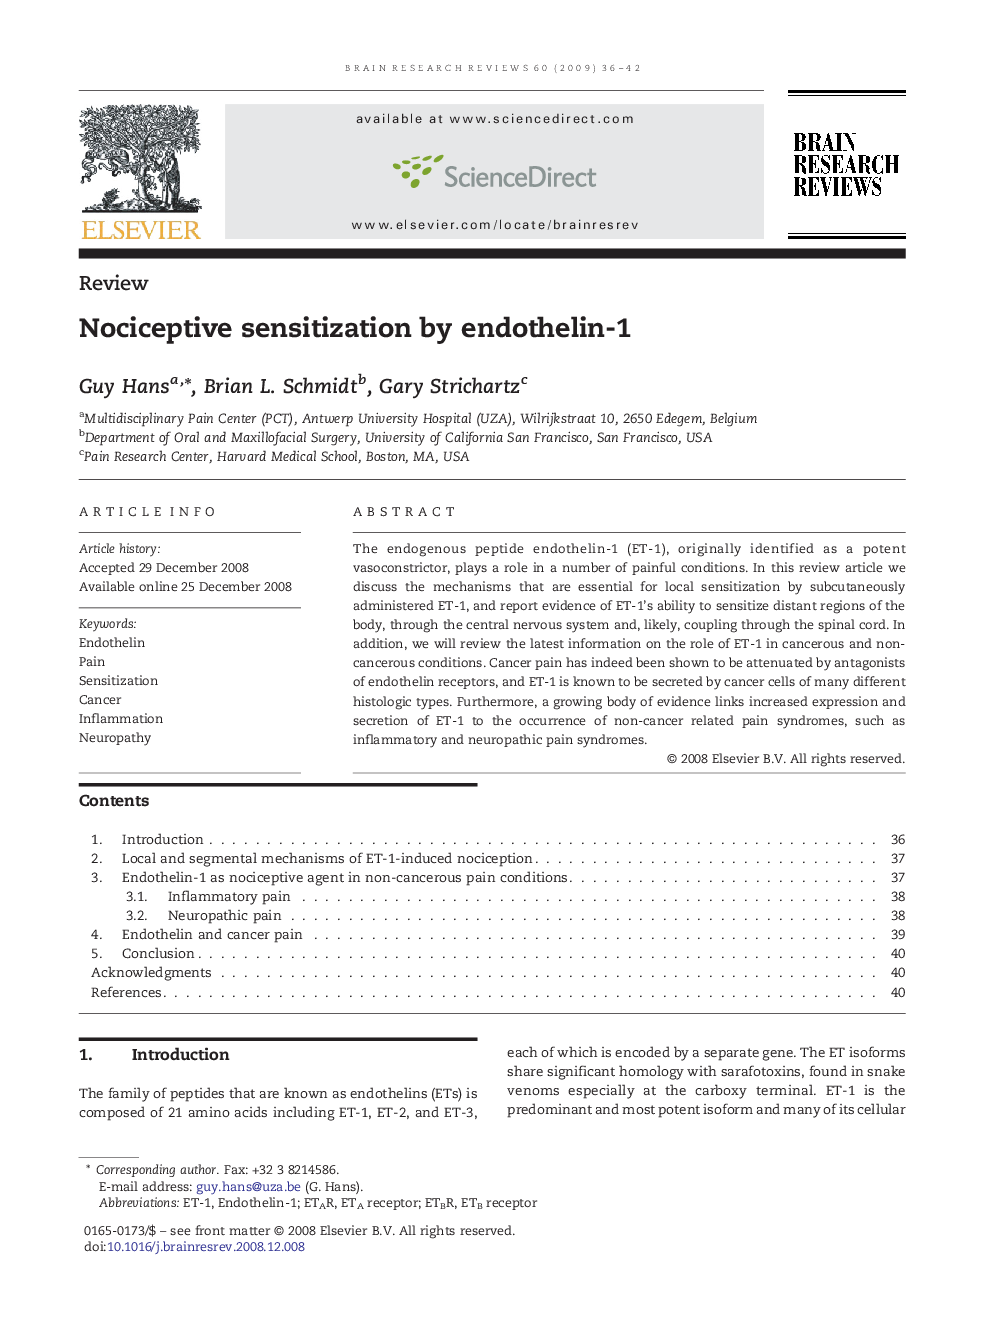 Nociceptive sensitization by endothelin-1